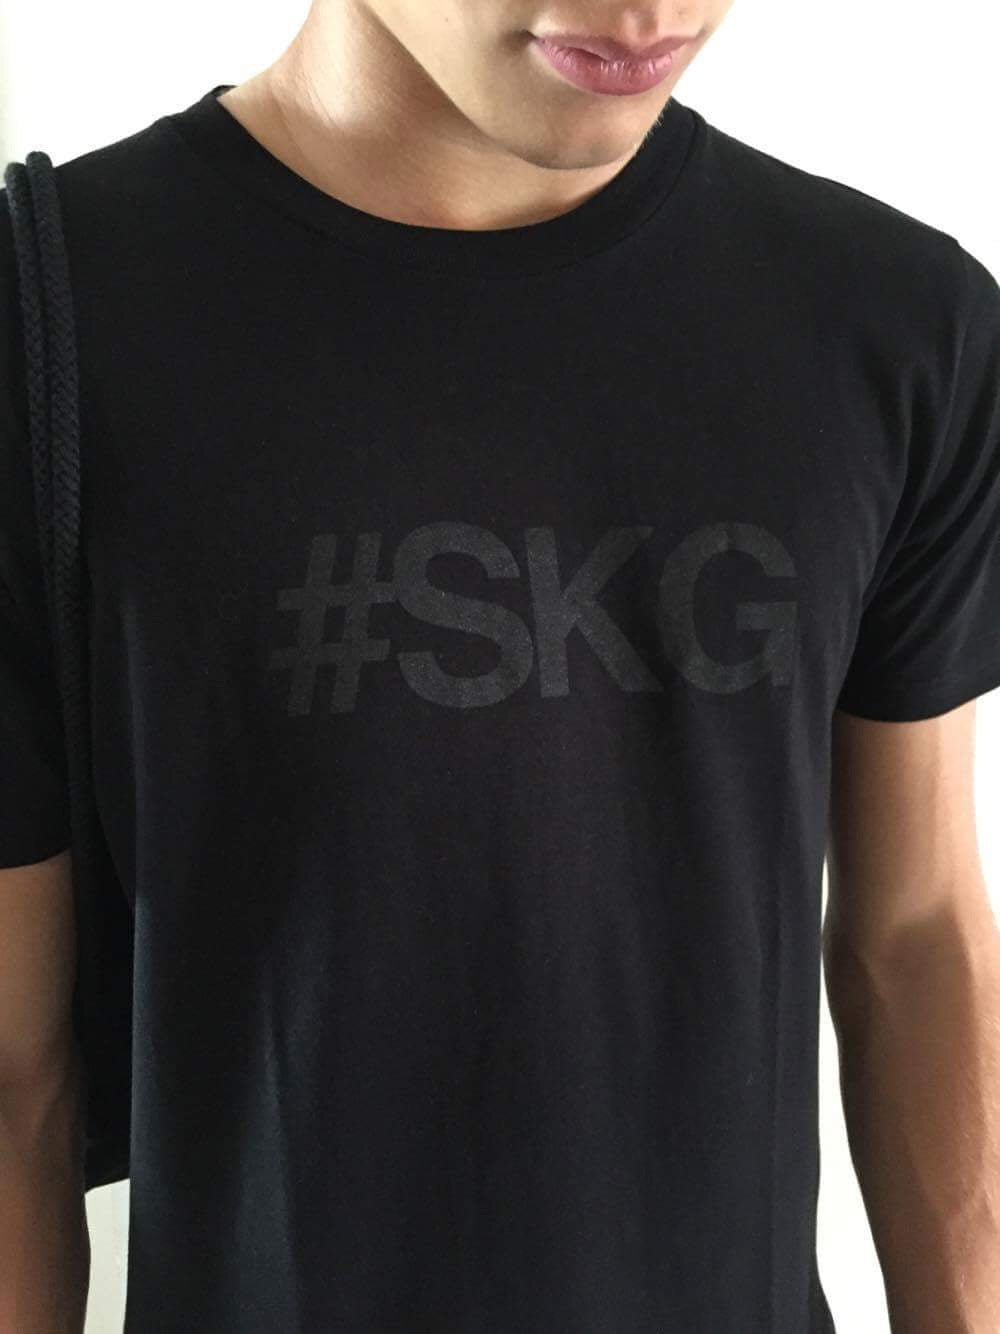 hellofrom SKG t-shirt